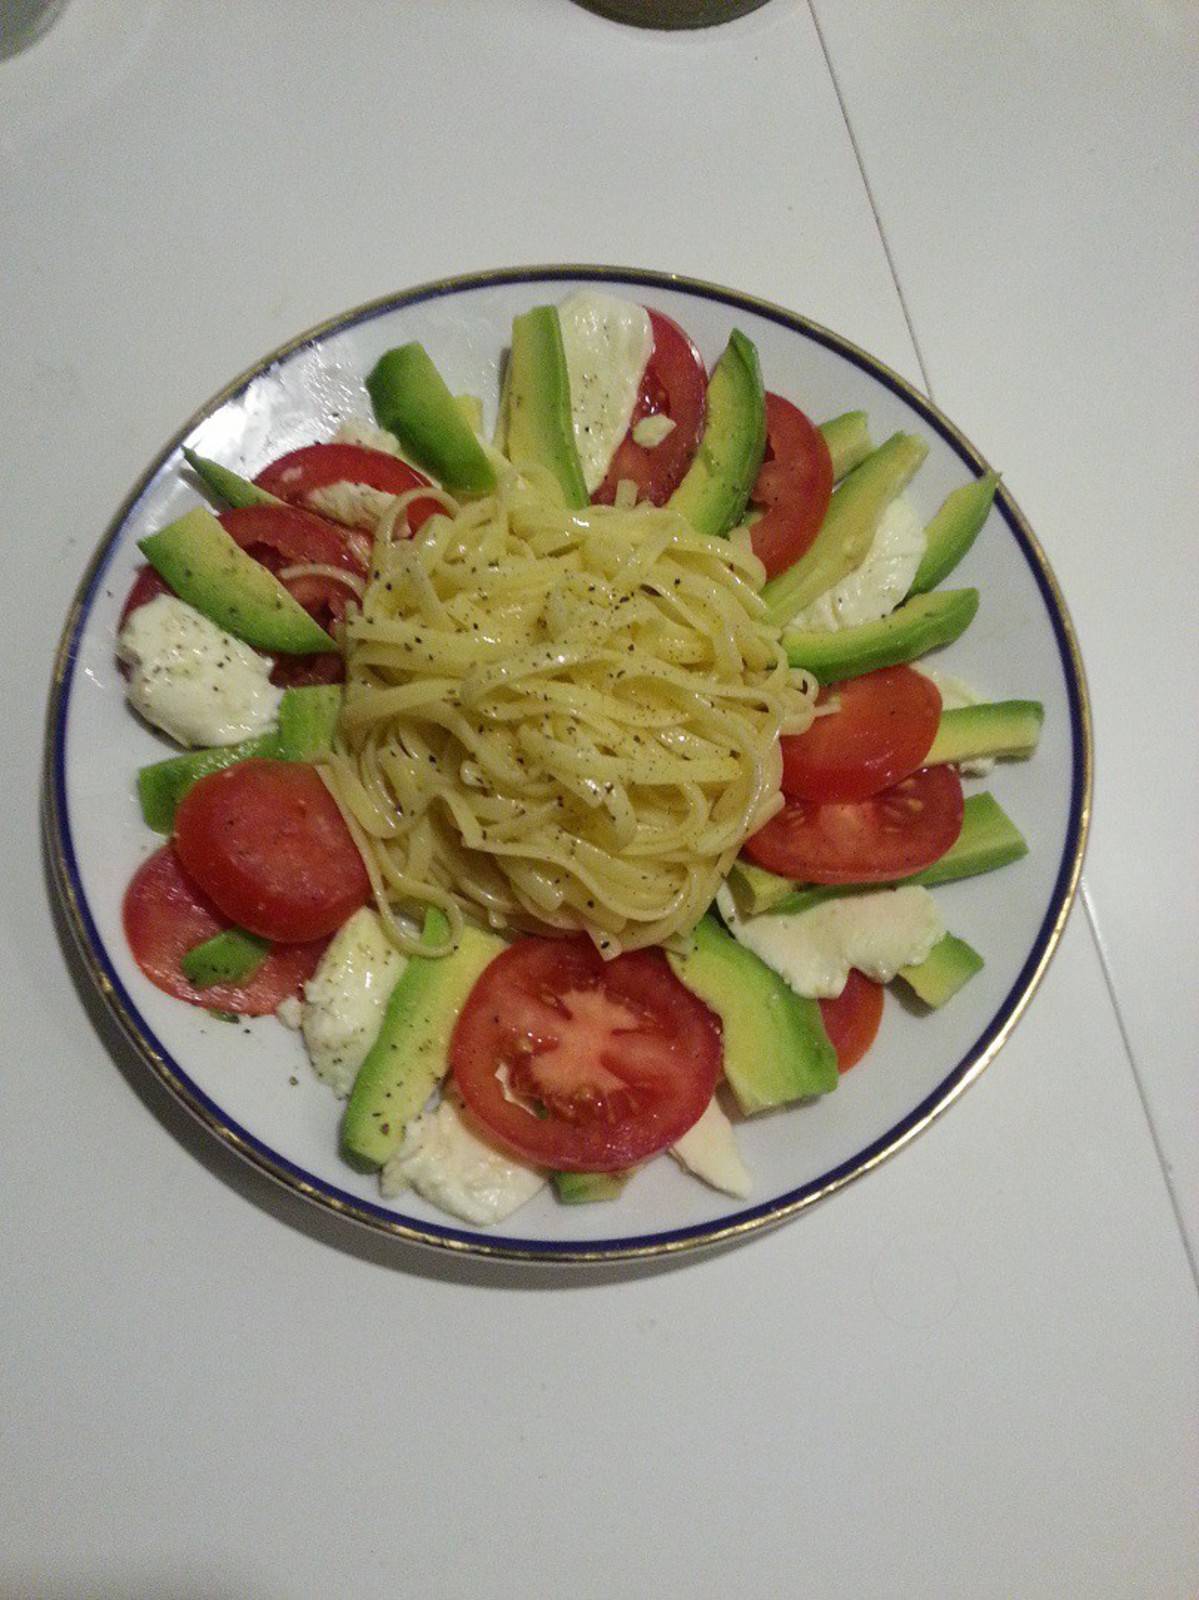 Avocado-Mozzarella-Nudelsalat